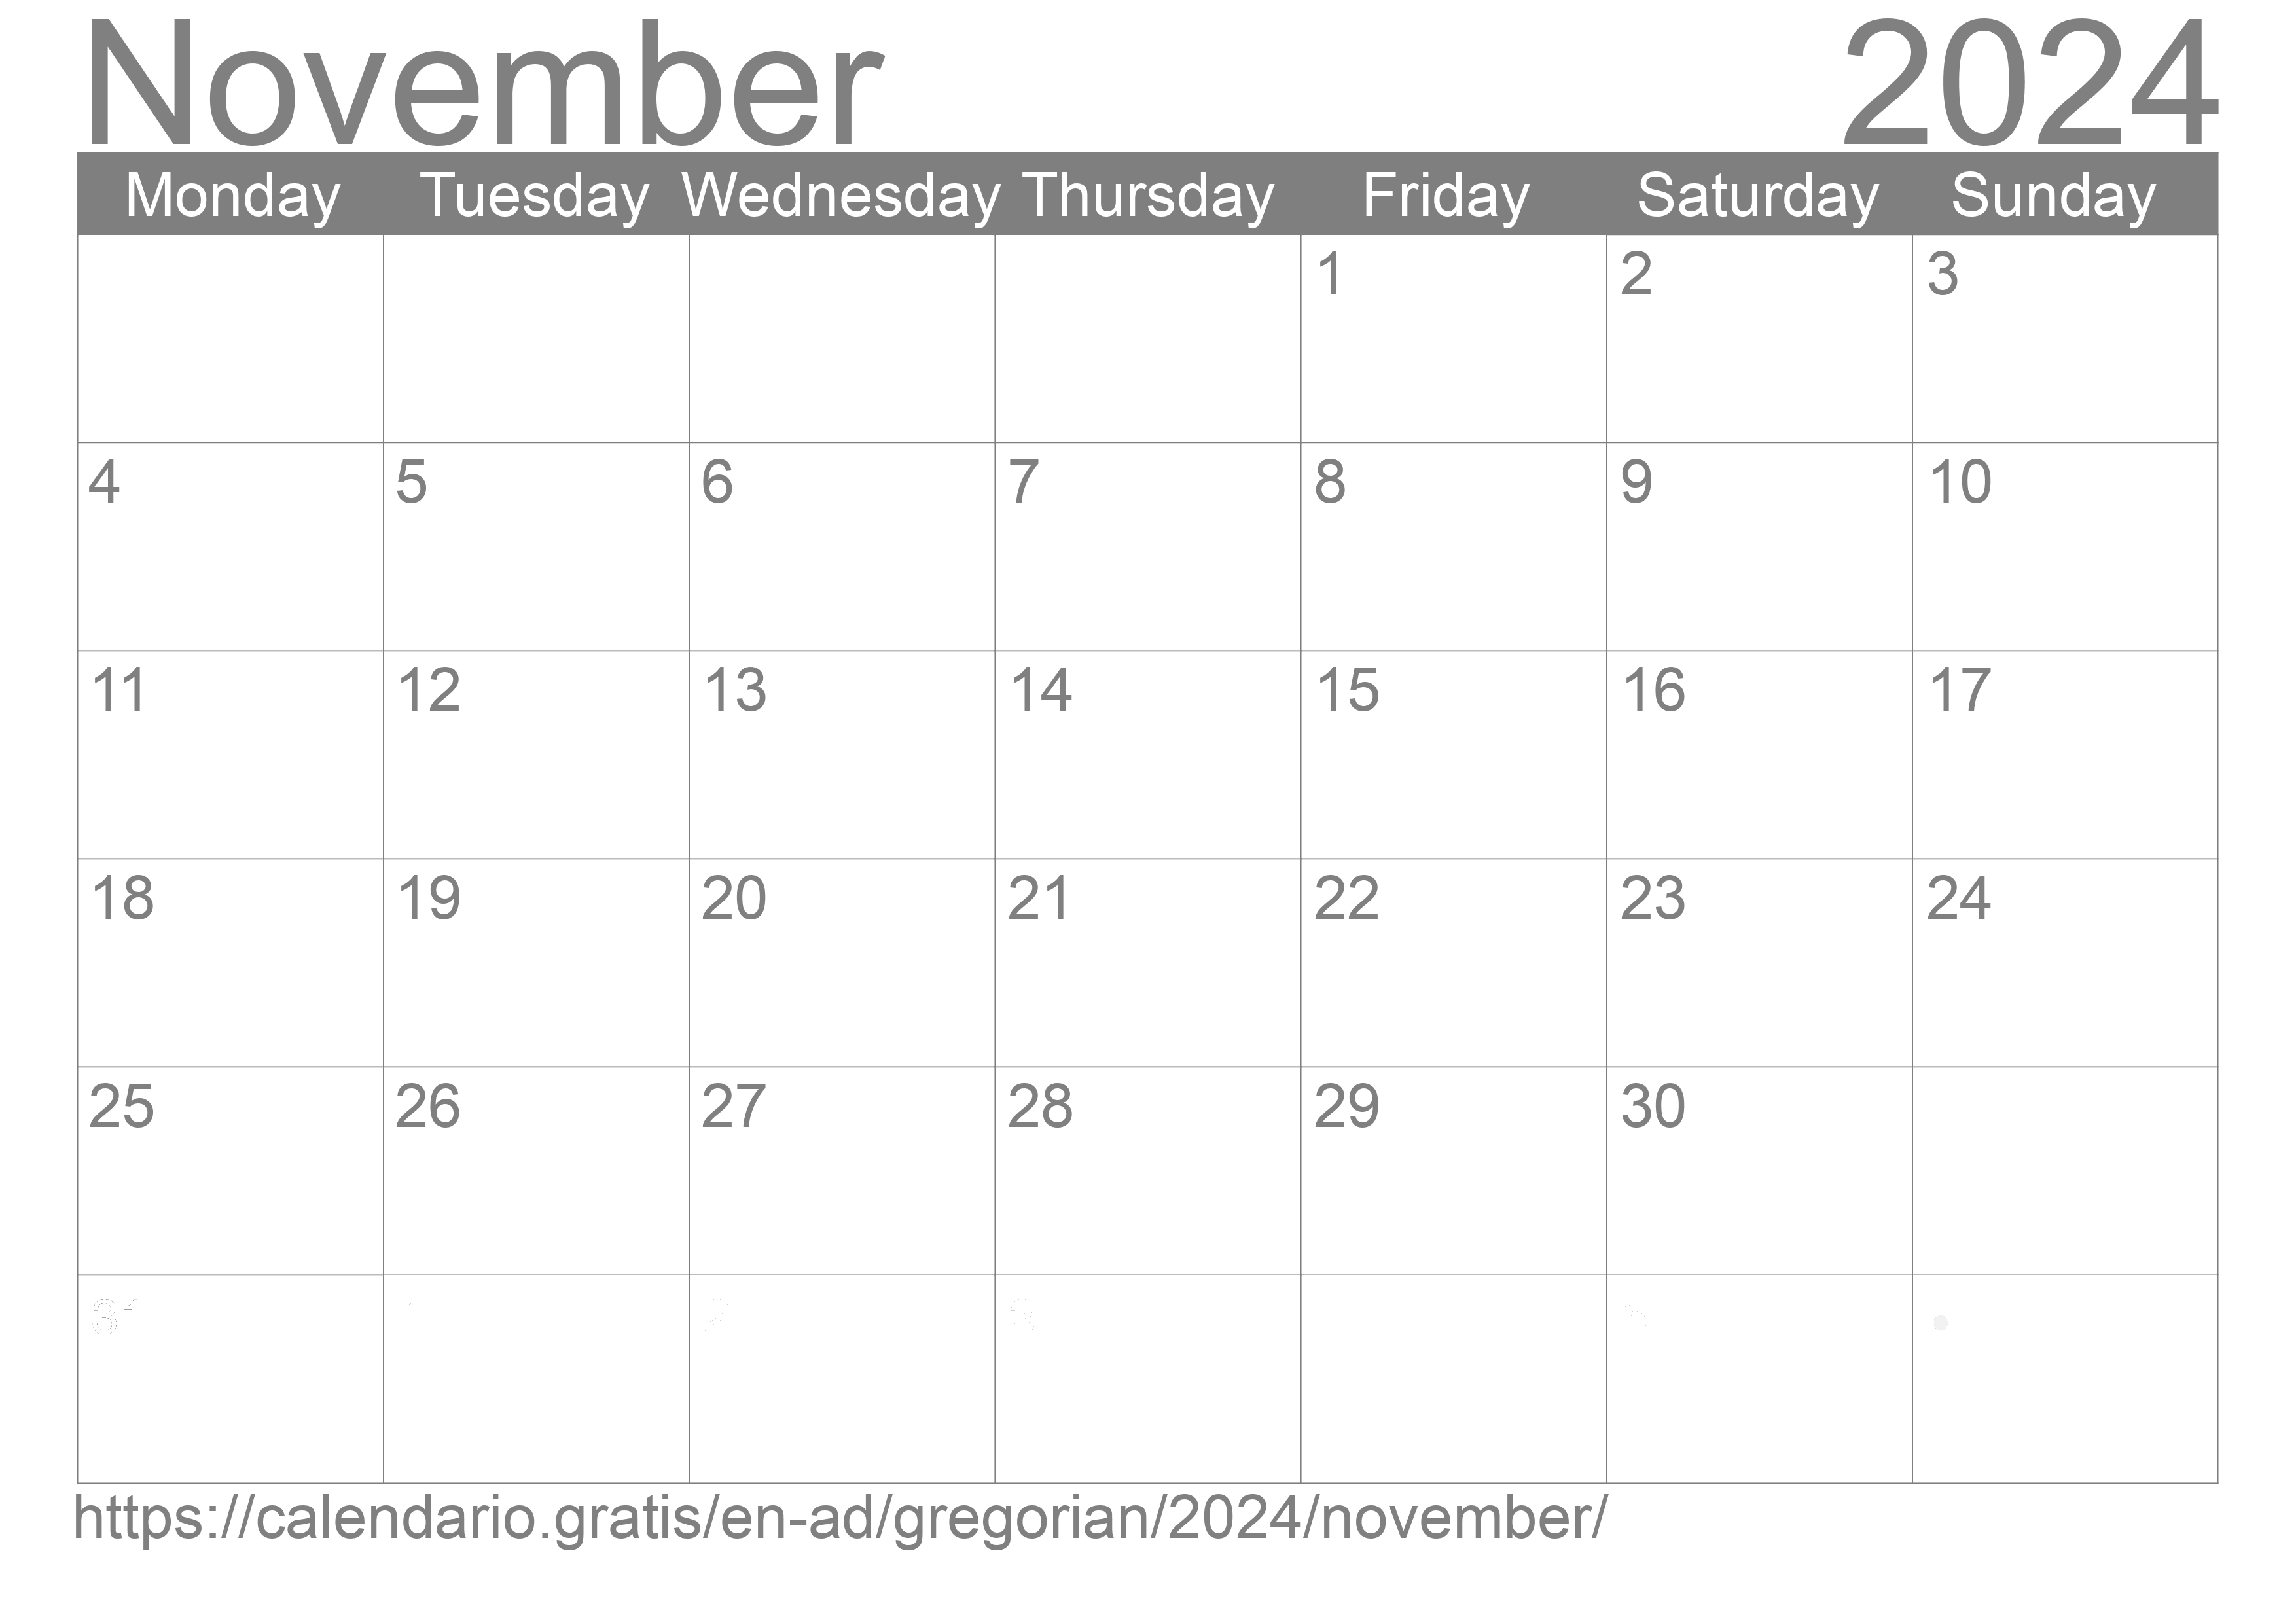 Calendar November 2024 to print